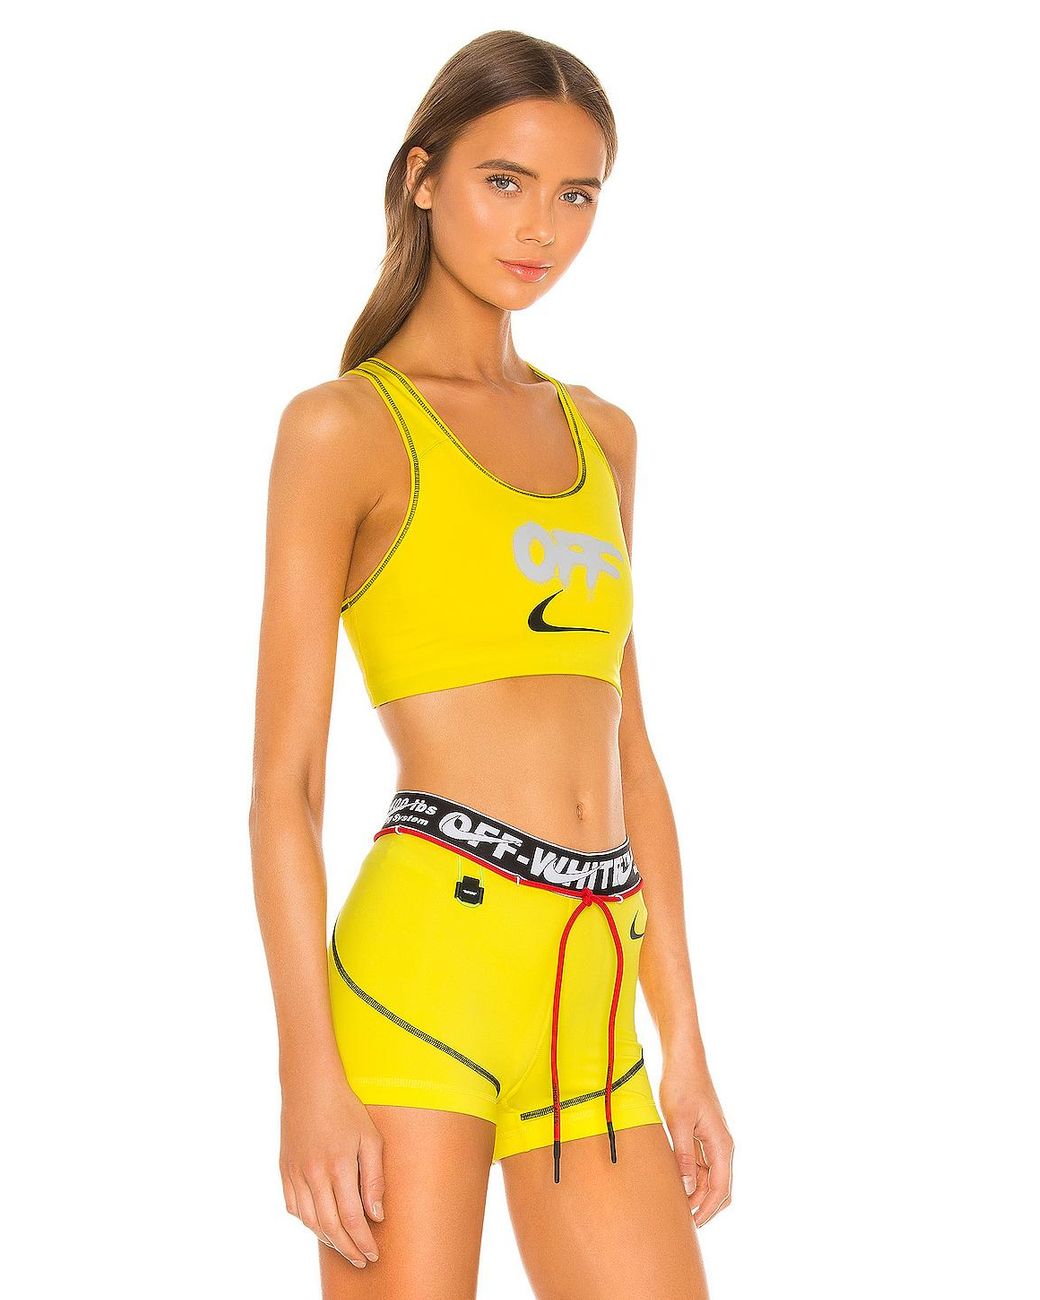 Nike X Off-white Nrg Ru Pro Classic Sports Bra in Yellow